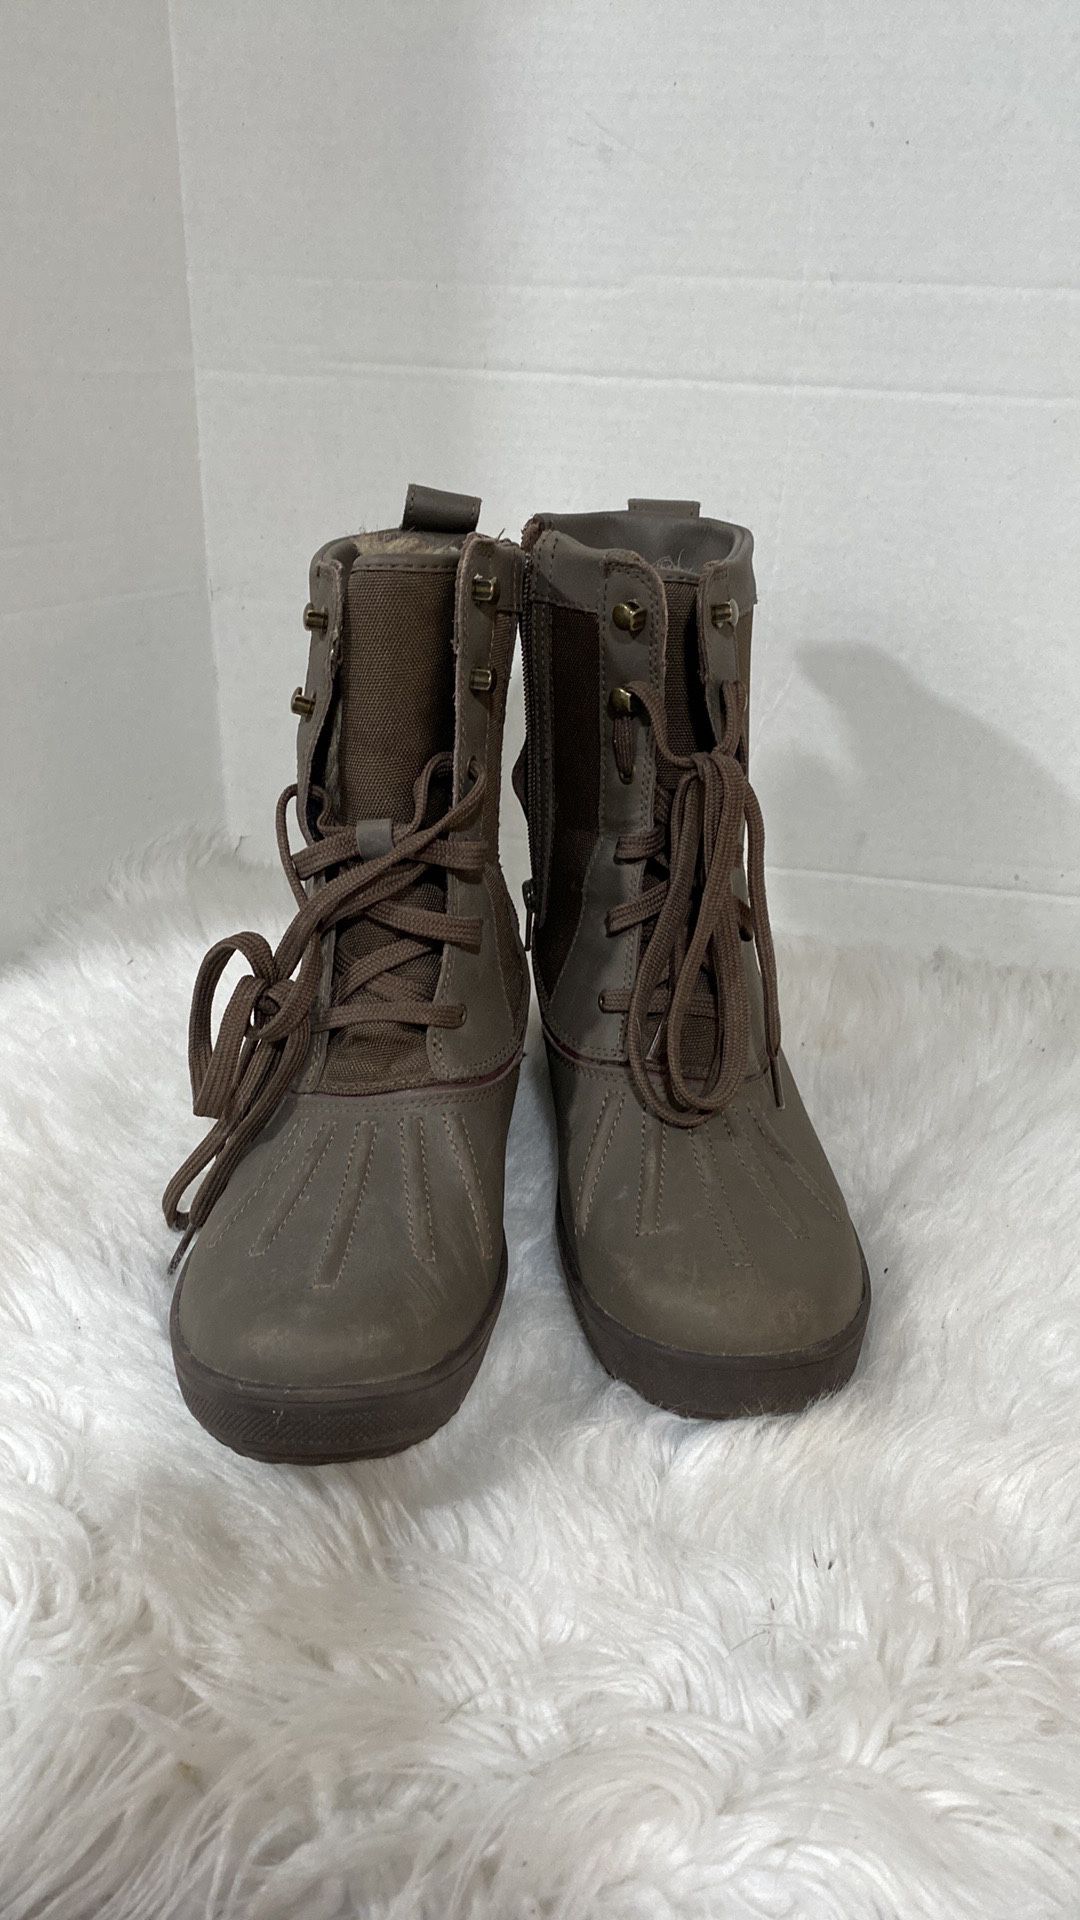 CLARKS - Rain / Boots / Brown fur inside size 6.5        